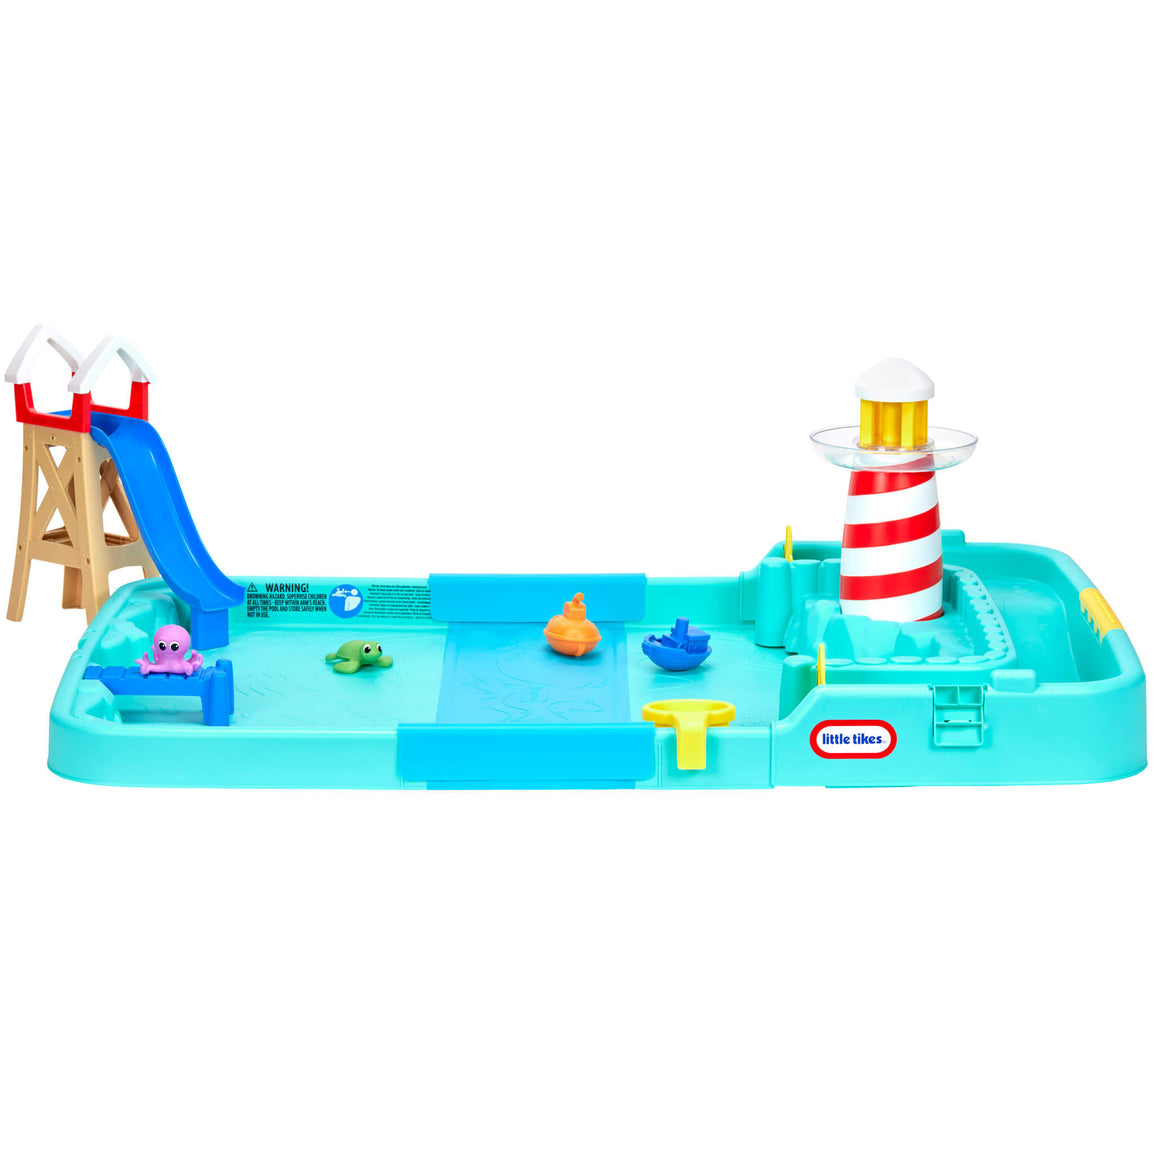 Children's Water Fountain Mat - Animal Kingdom Sprinkler Splash Pad - New